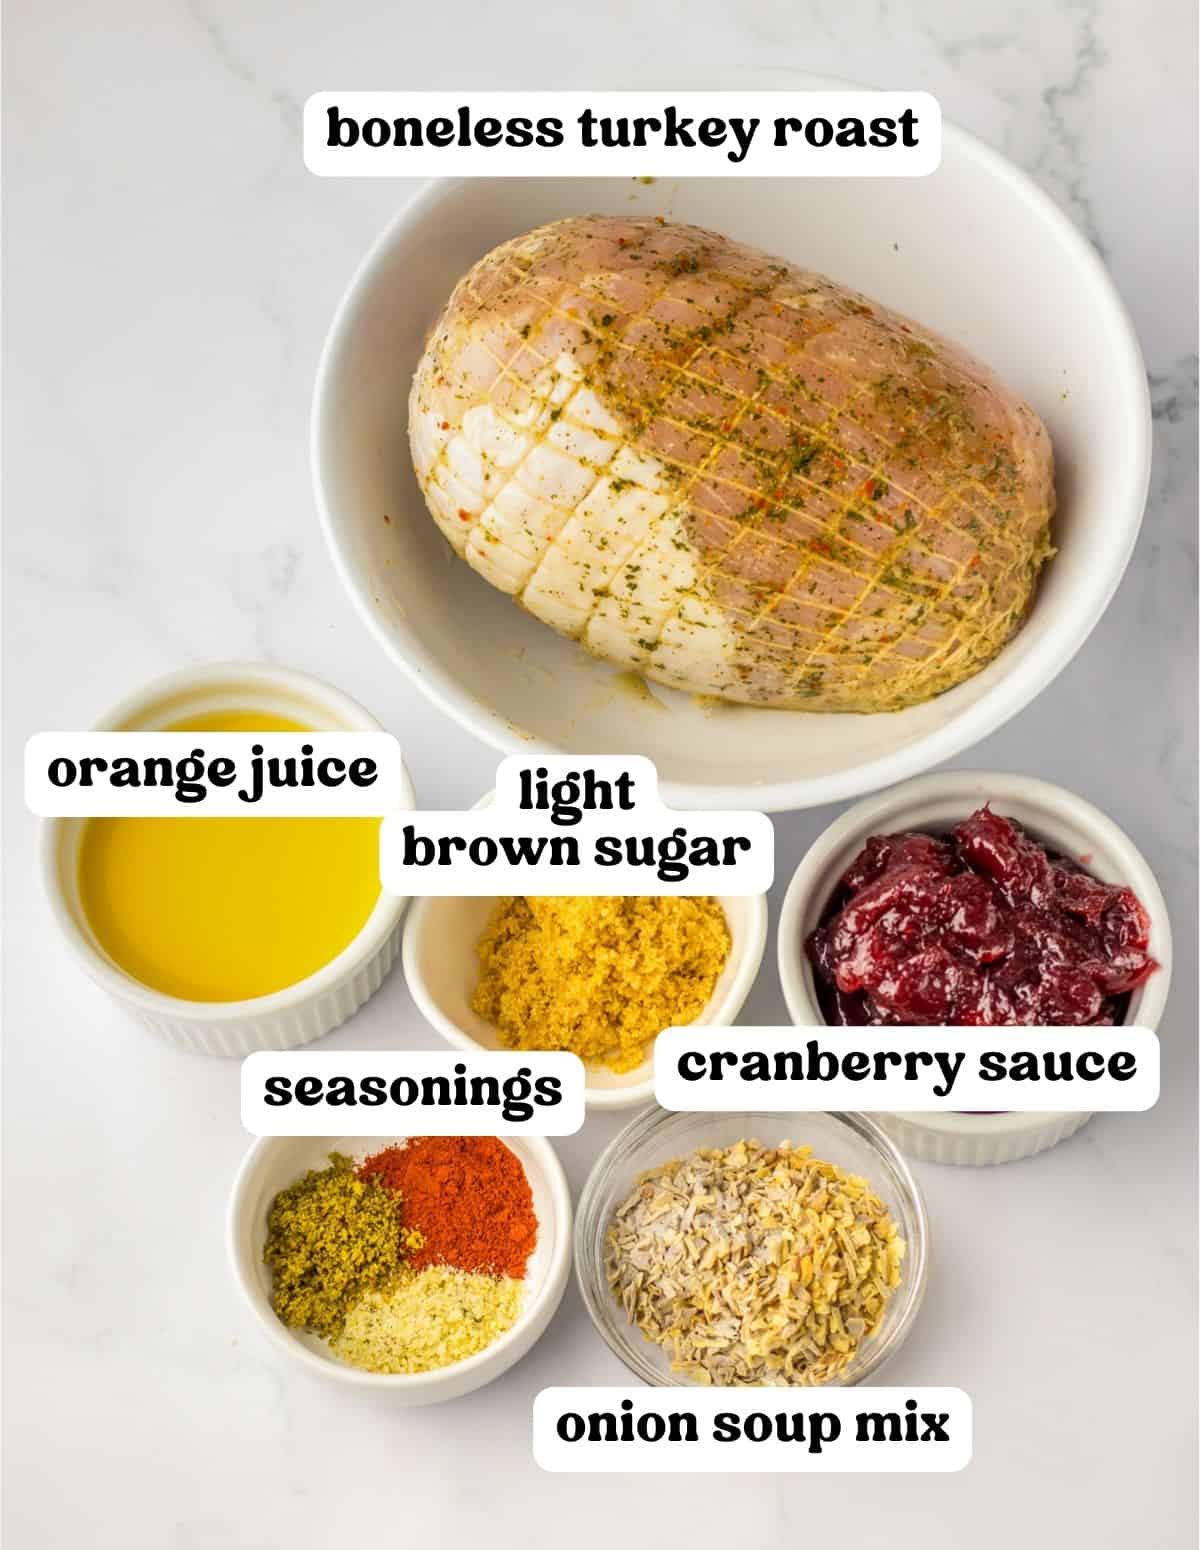 Boneless turkey roast, orange juice, cranberry sauce, light brown sugar, and seasonings.